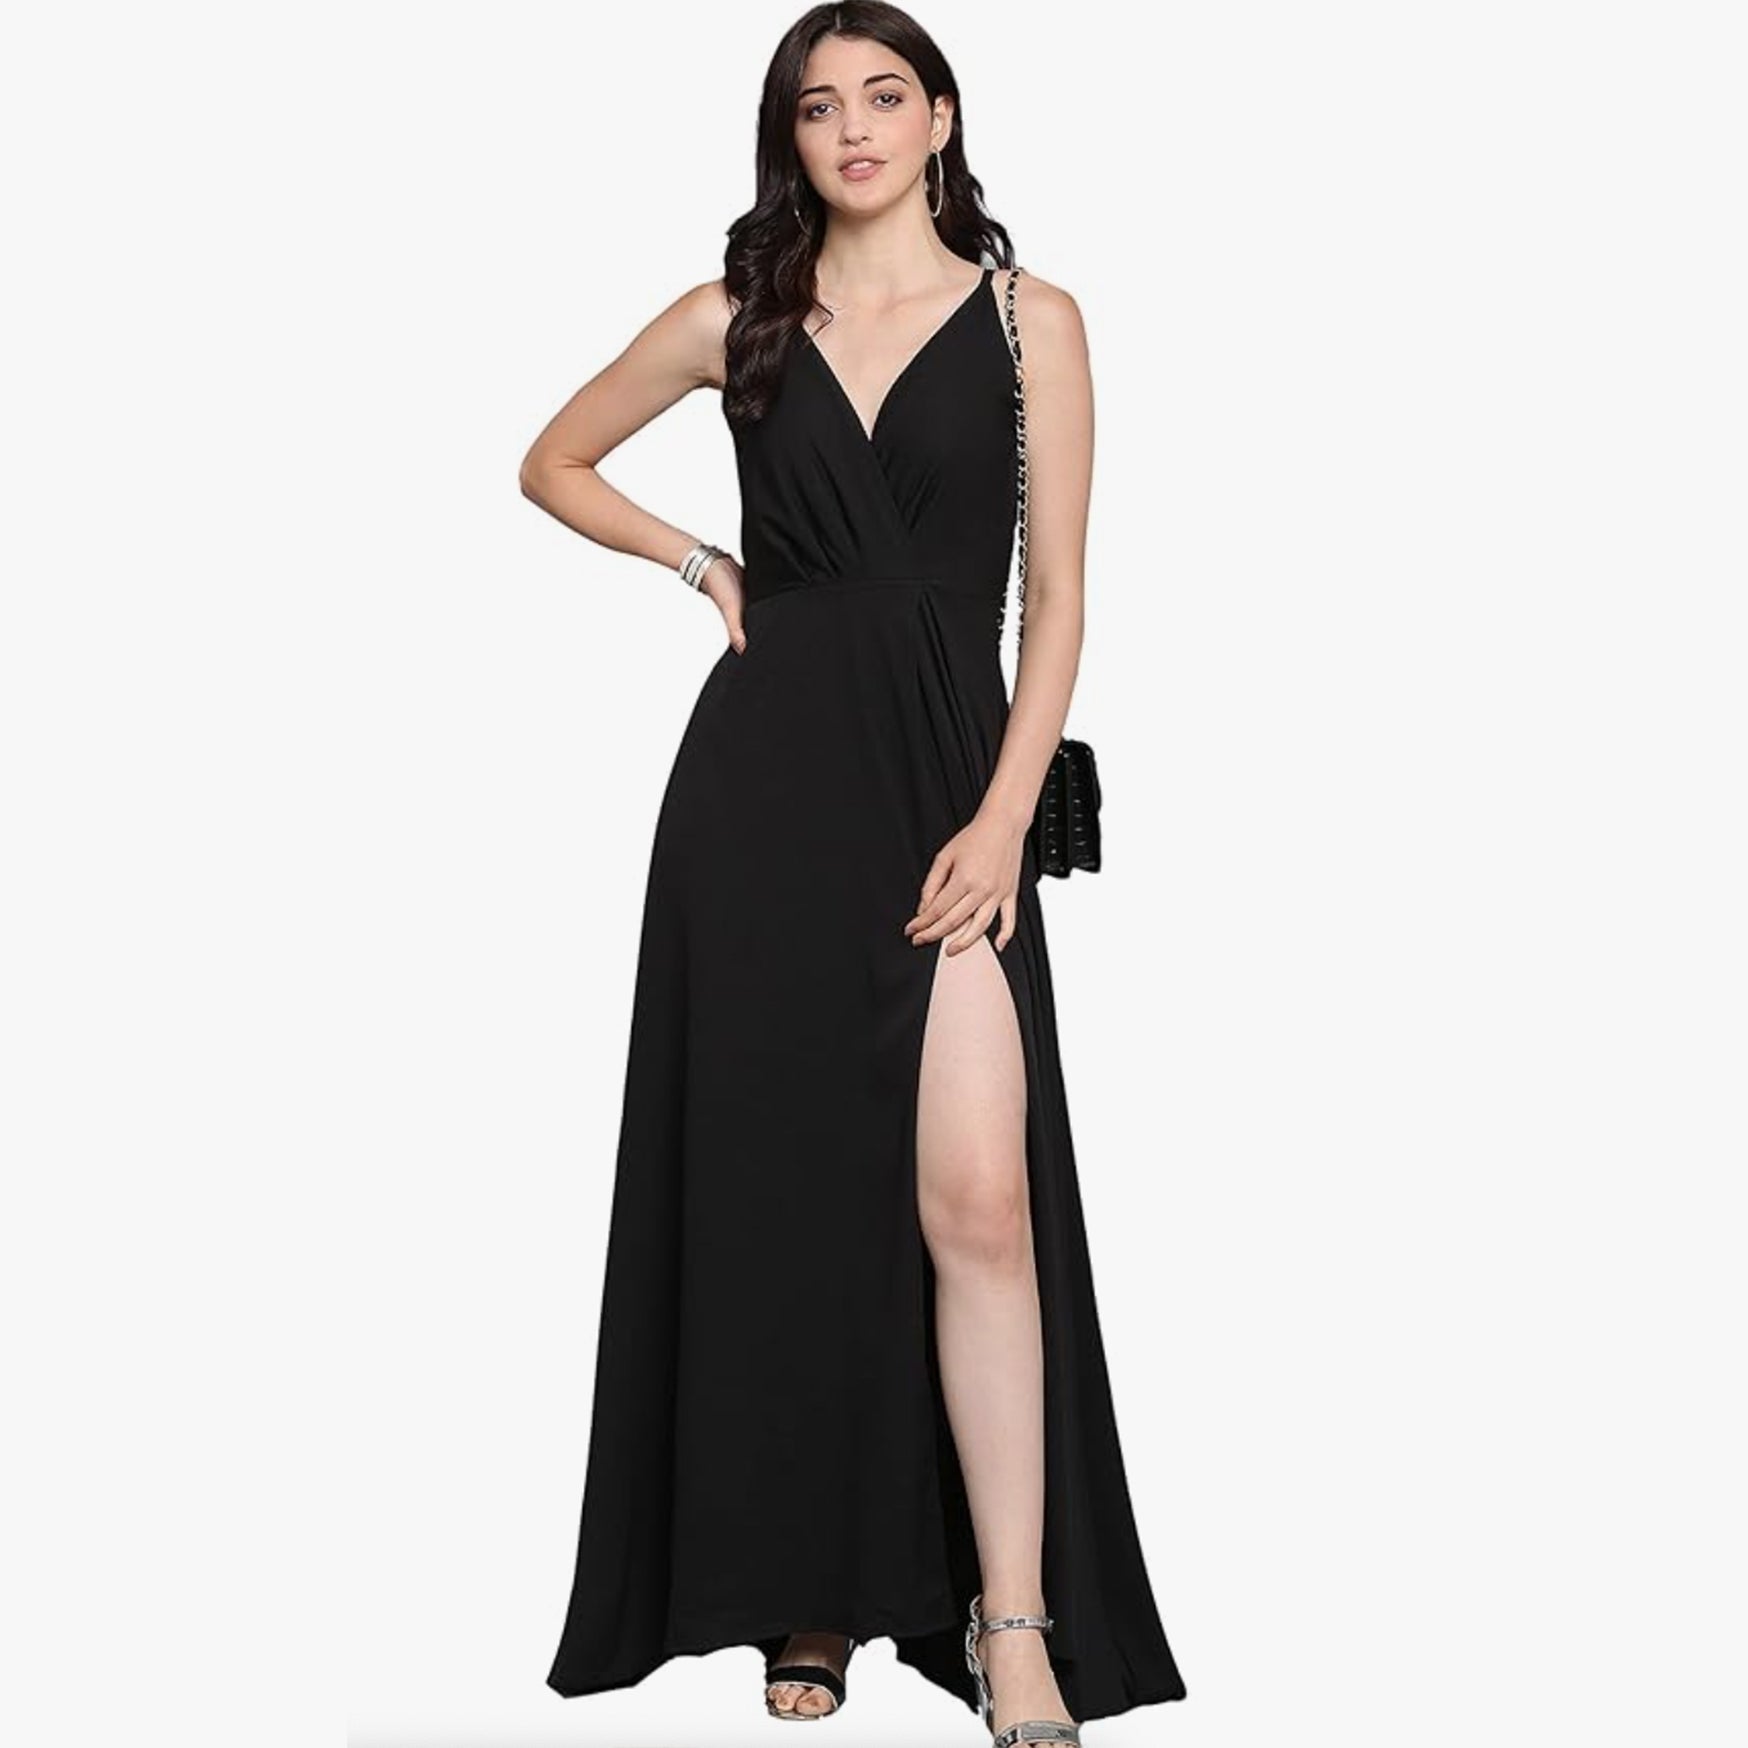 Sheetal Associates Women's Layered Sleeves High Neck Bodycon Casual Knee Length Midi Dress Black